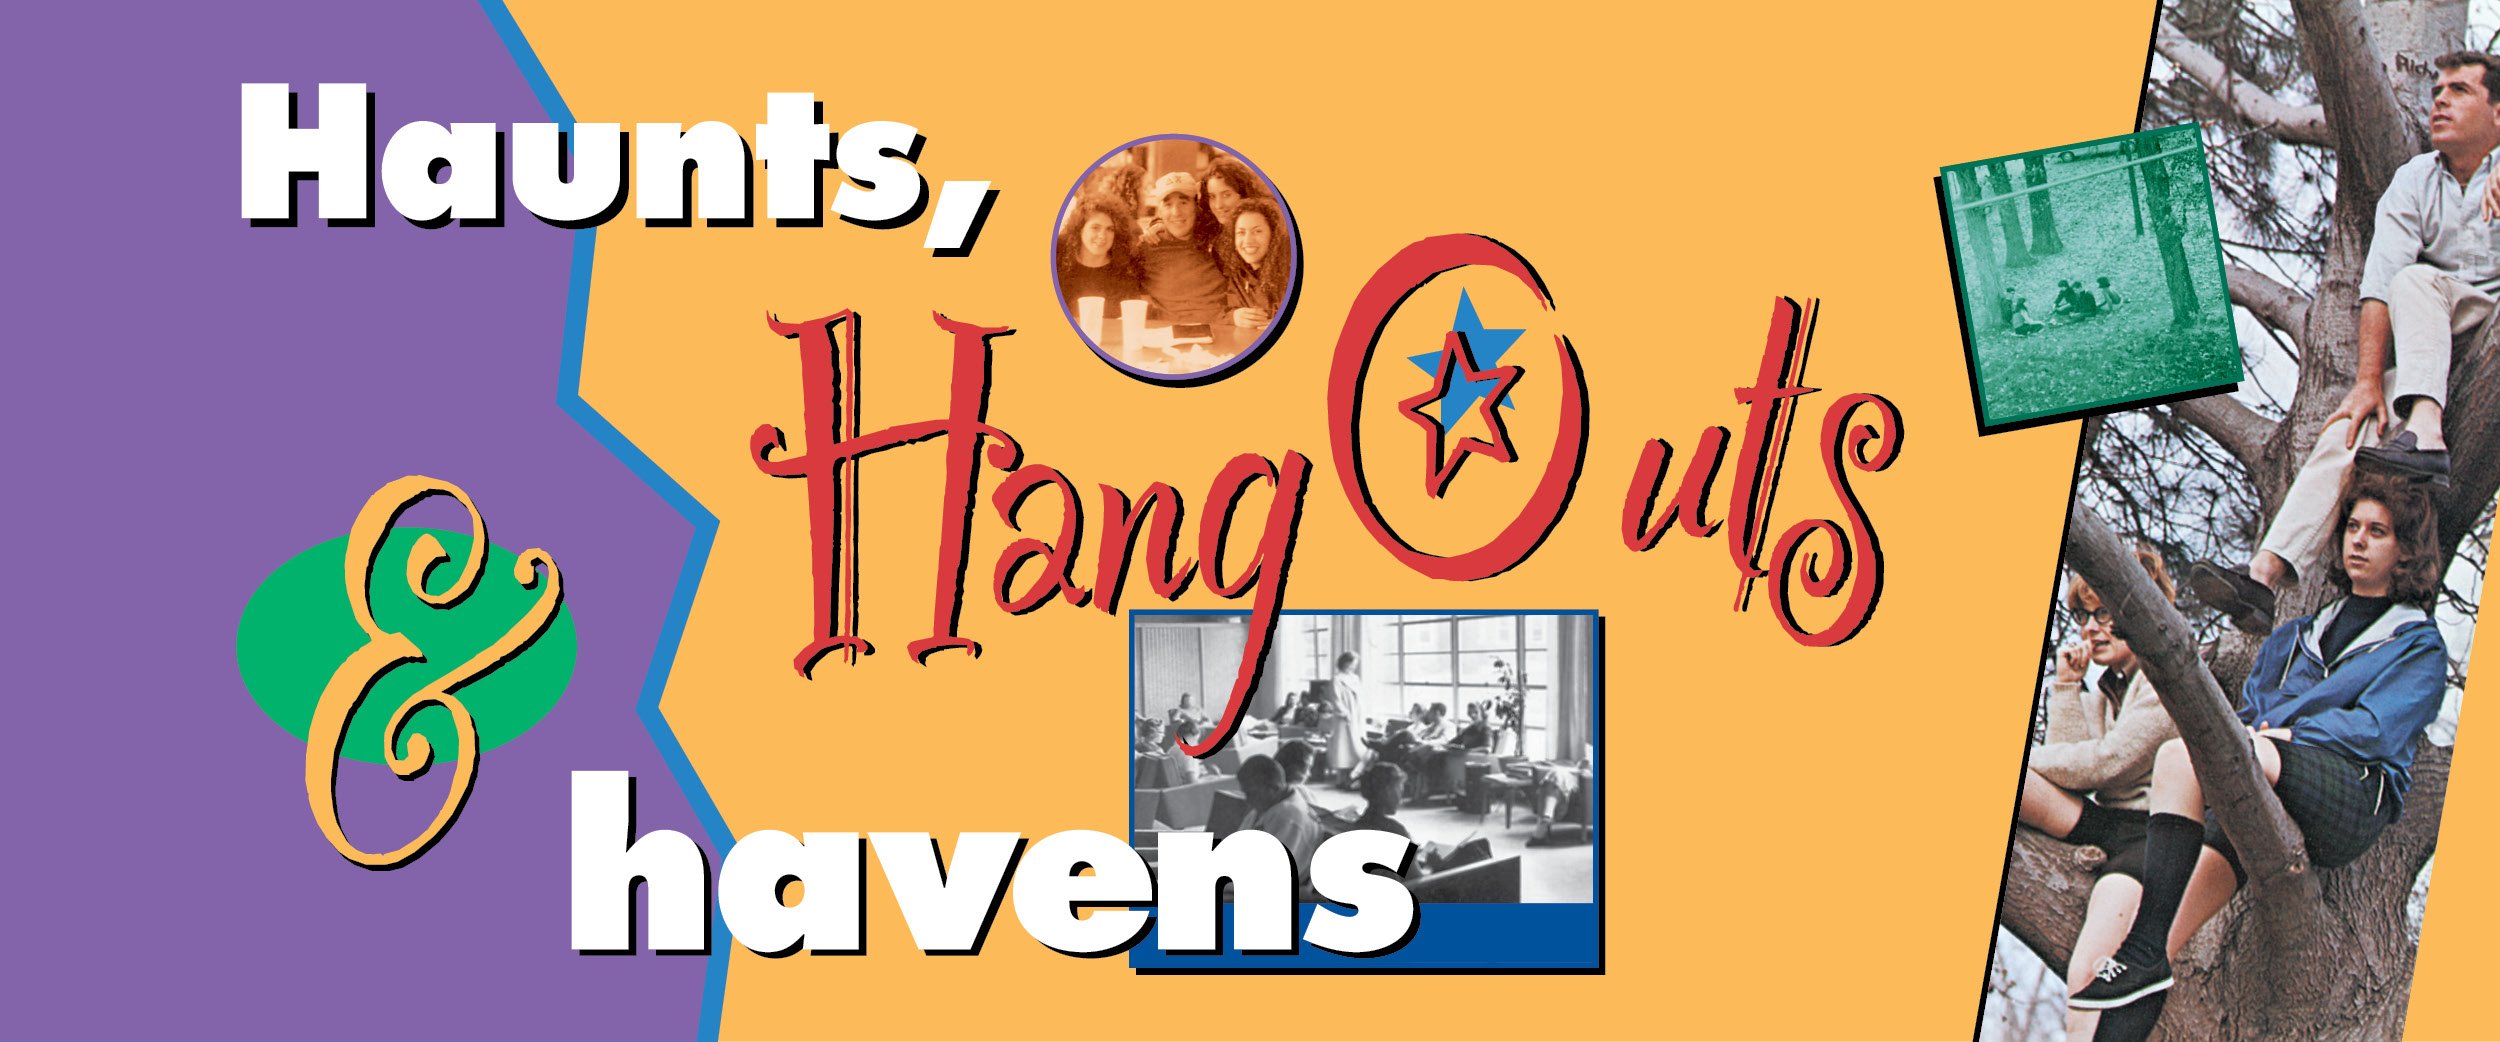 Haunts, hangouts and havens